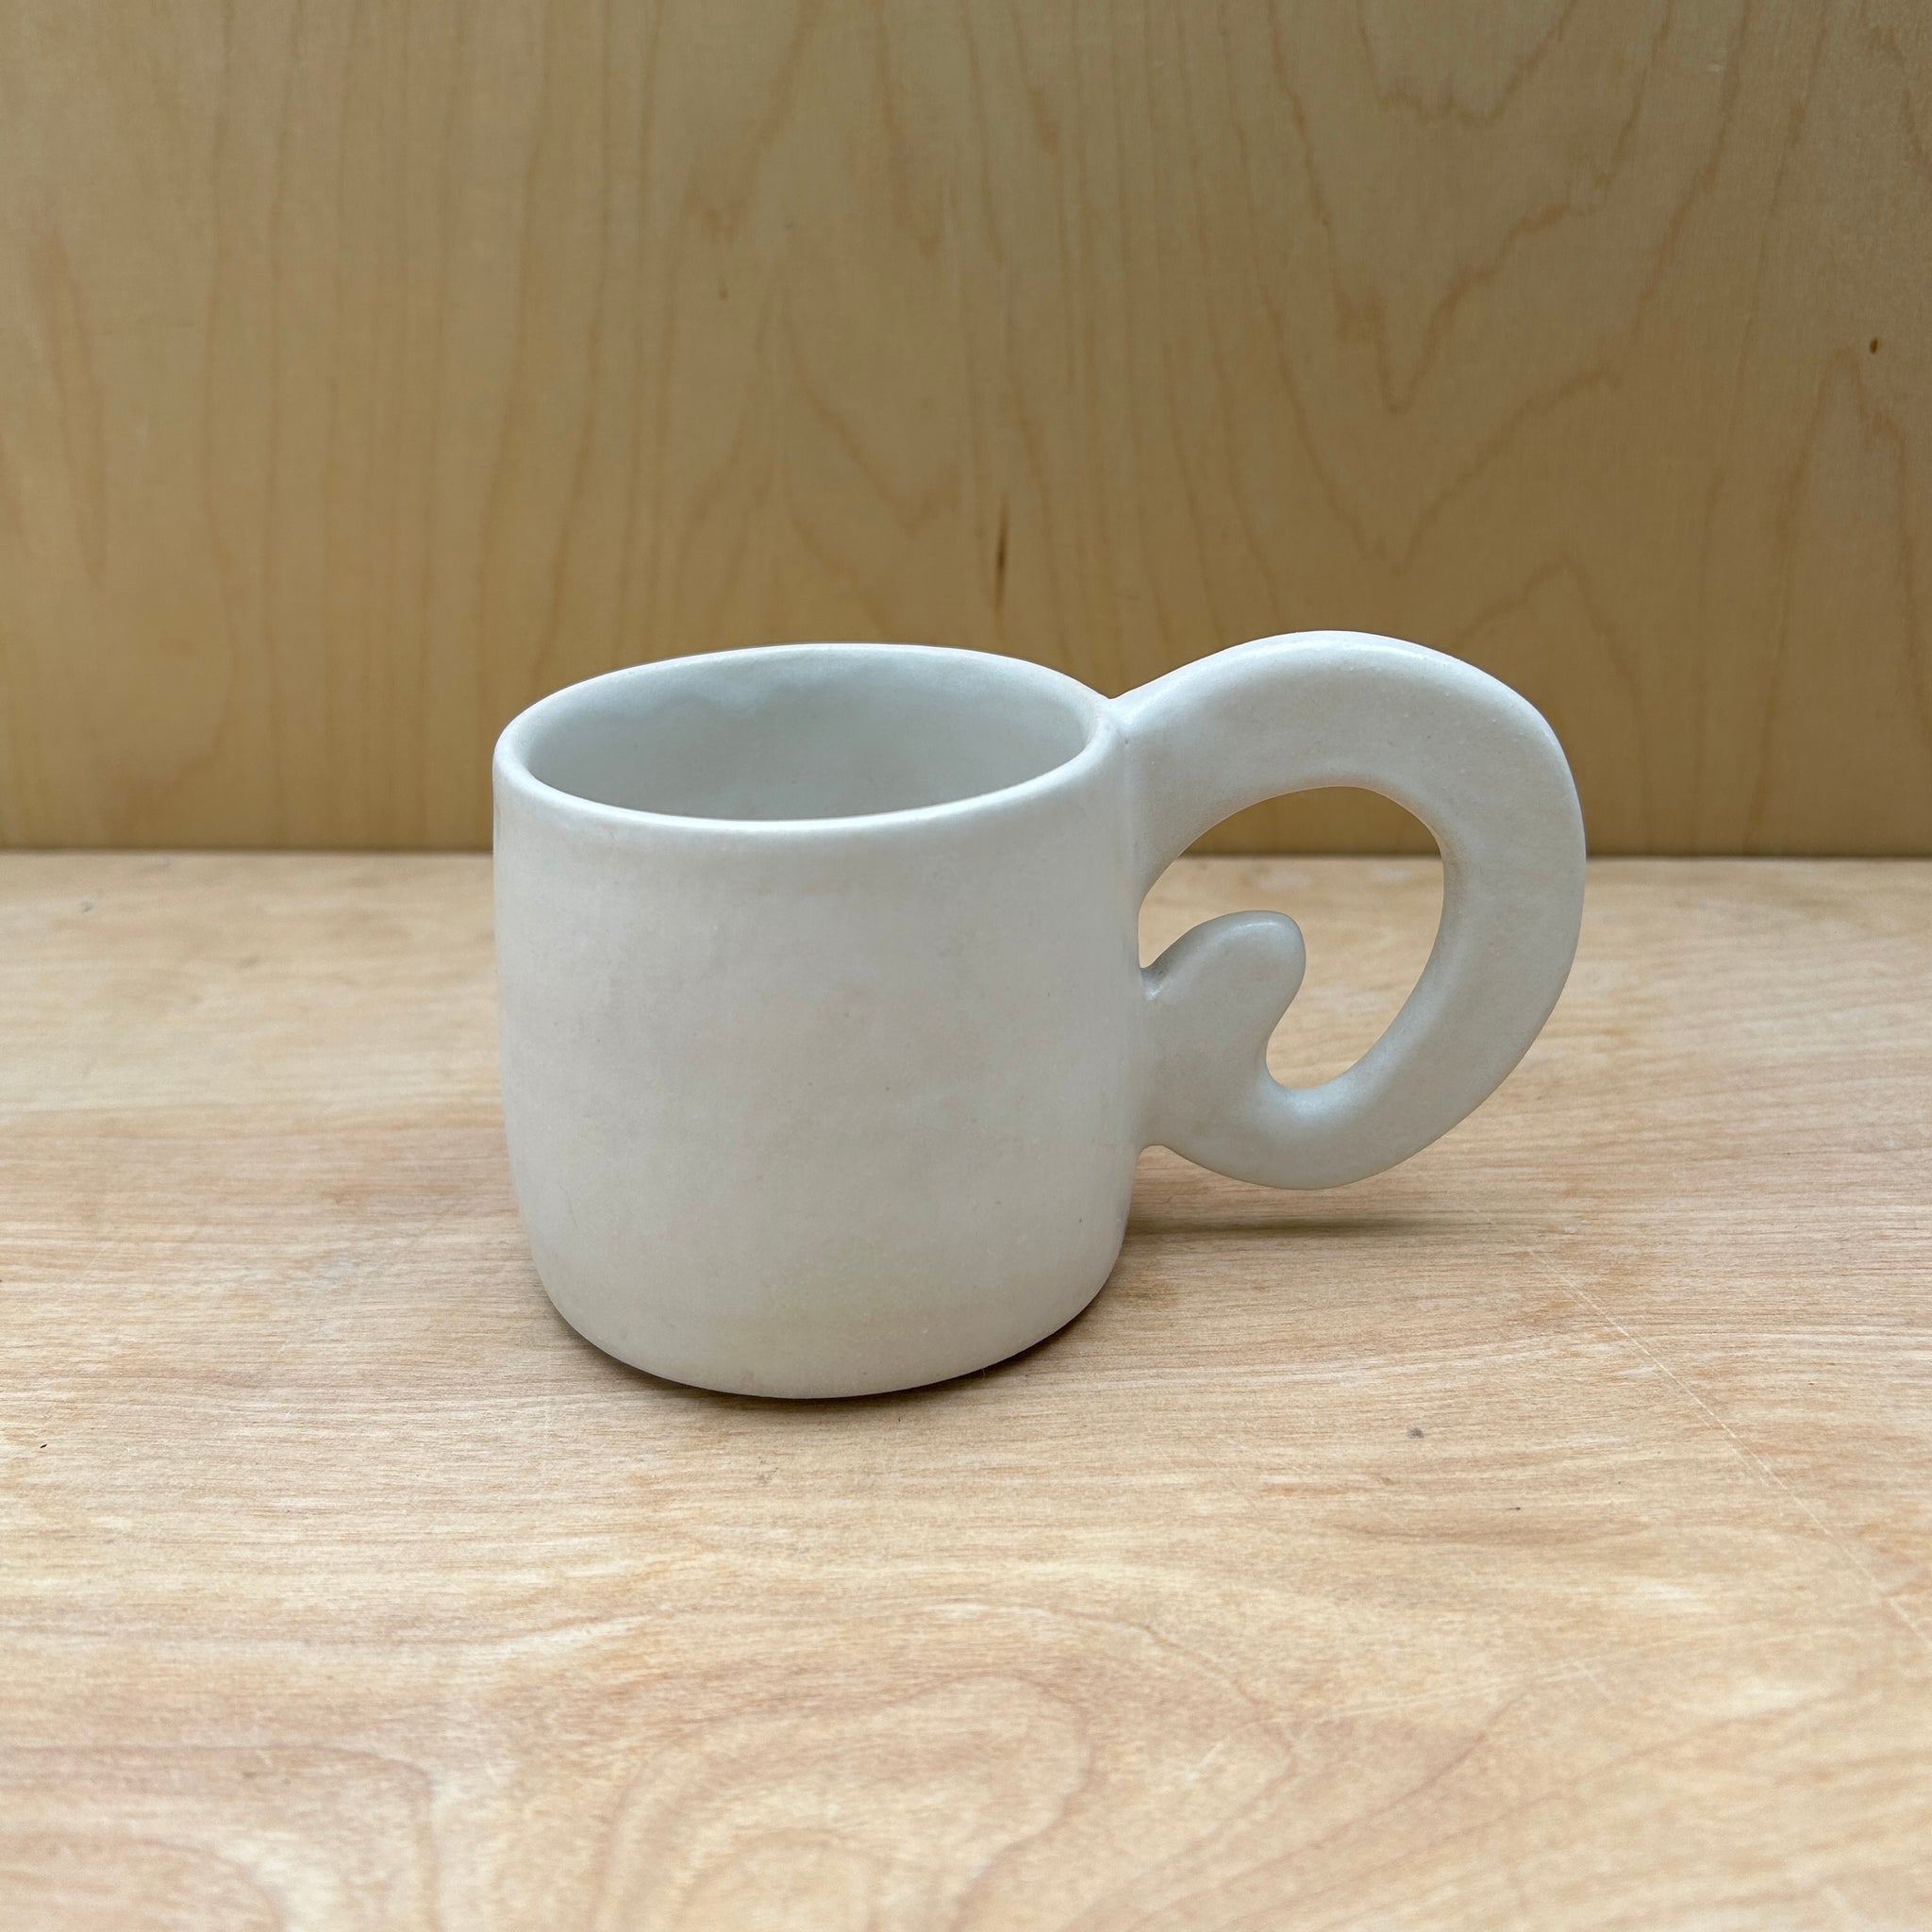 Mugs by Shoe ceramics